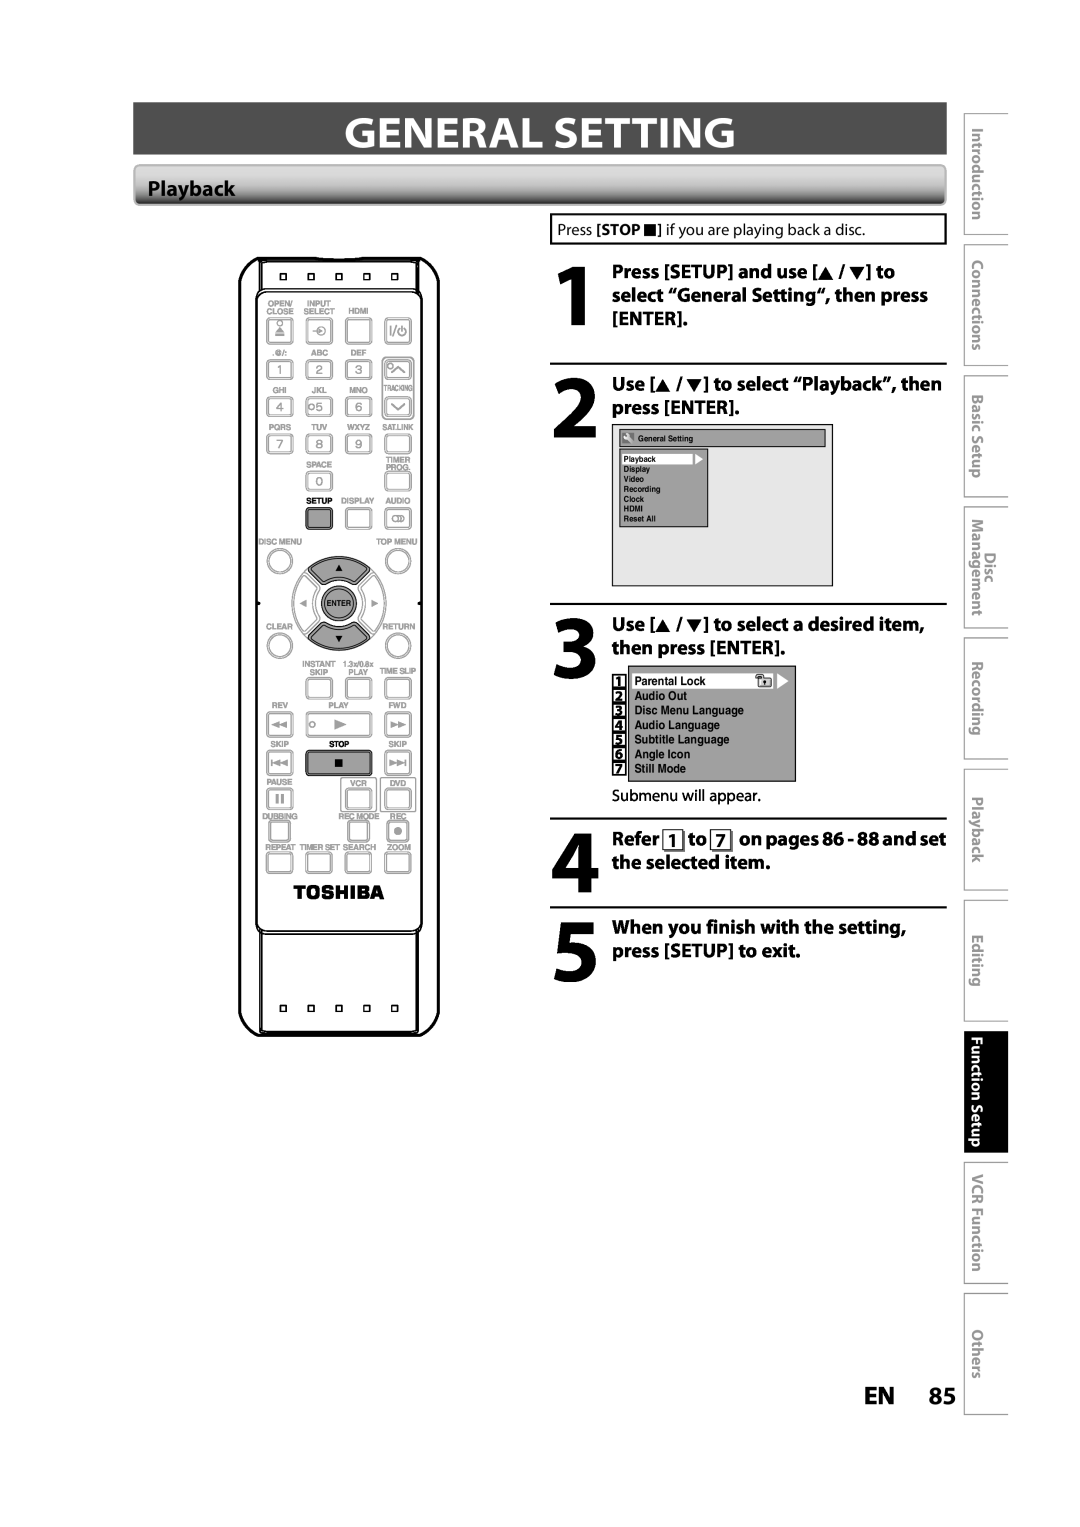 Toshiba DVR620KC General Setting, Use K / L to select “Playback”, then press ENTER, Press SETUP and use K / L to 